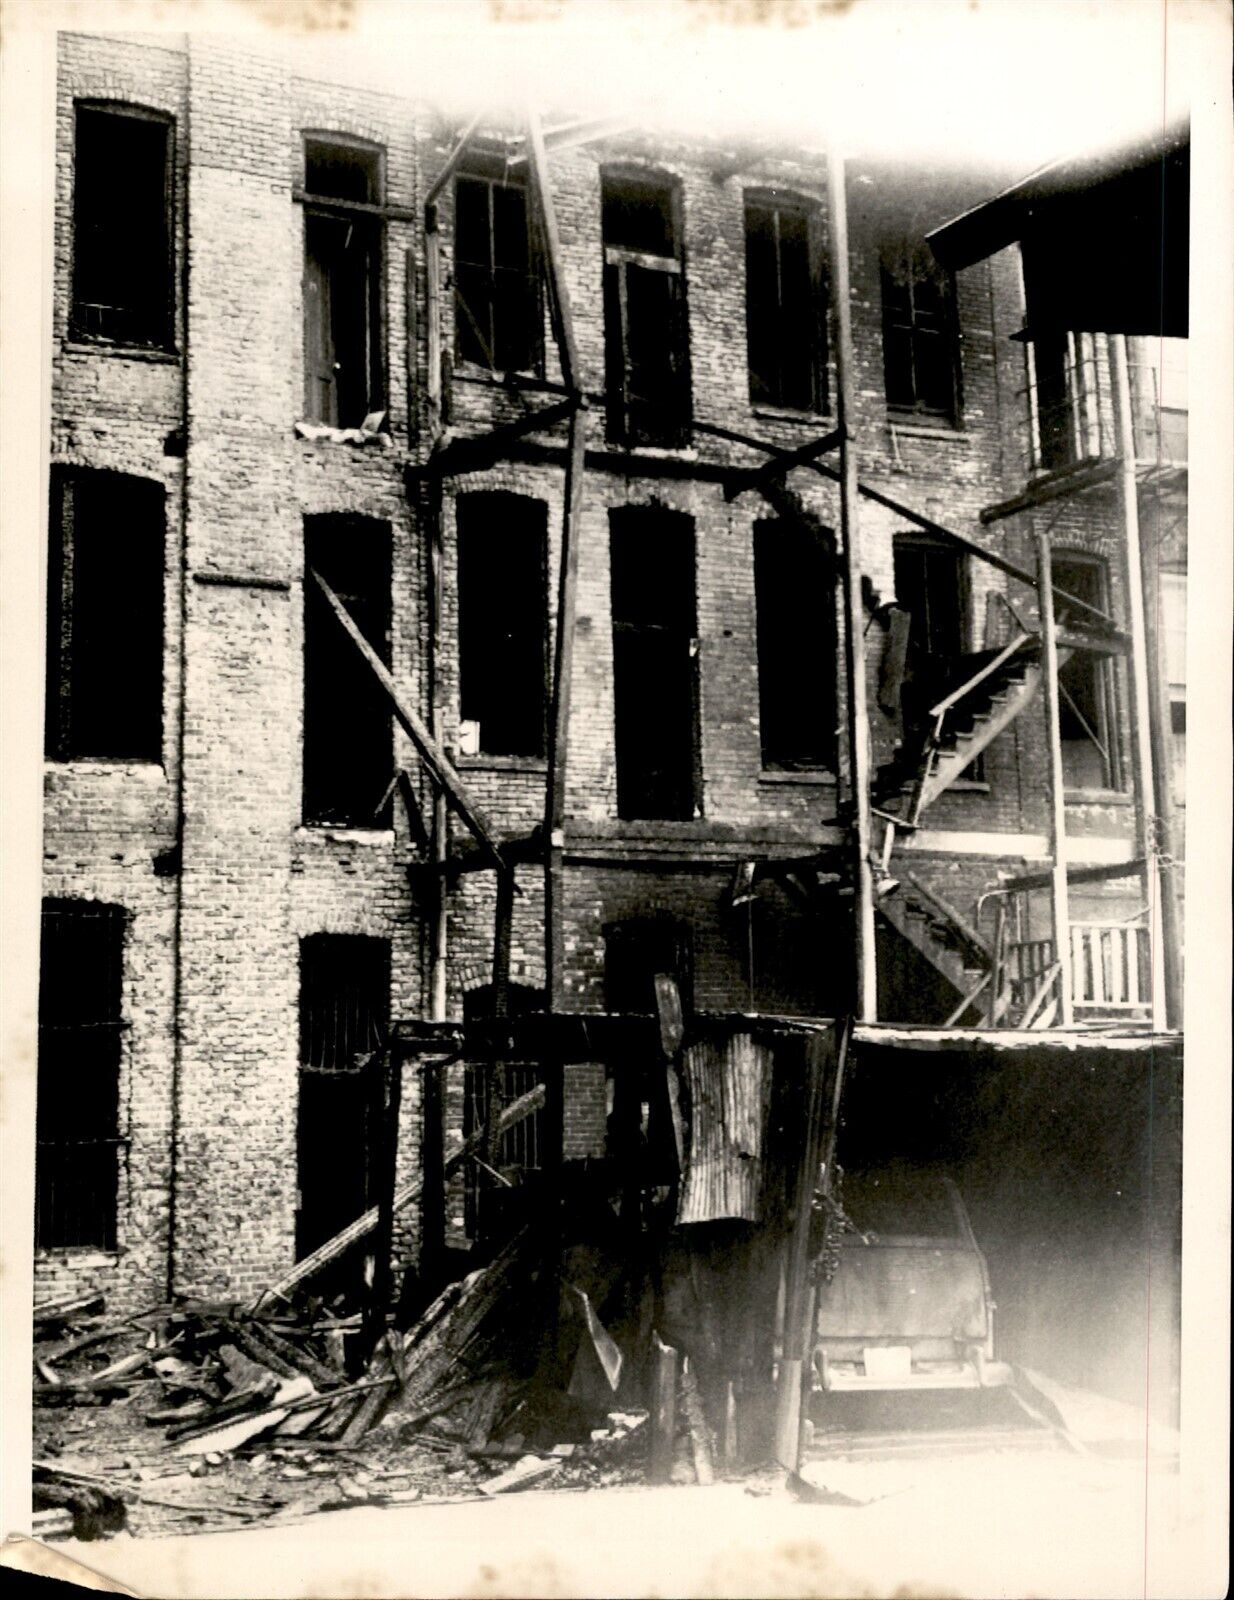 GA193 1953 Original Photo GUTTED RUINS OF SLUM BUILDING CHICAGO SKID ROW POVERTY